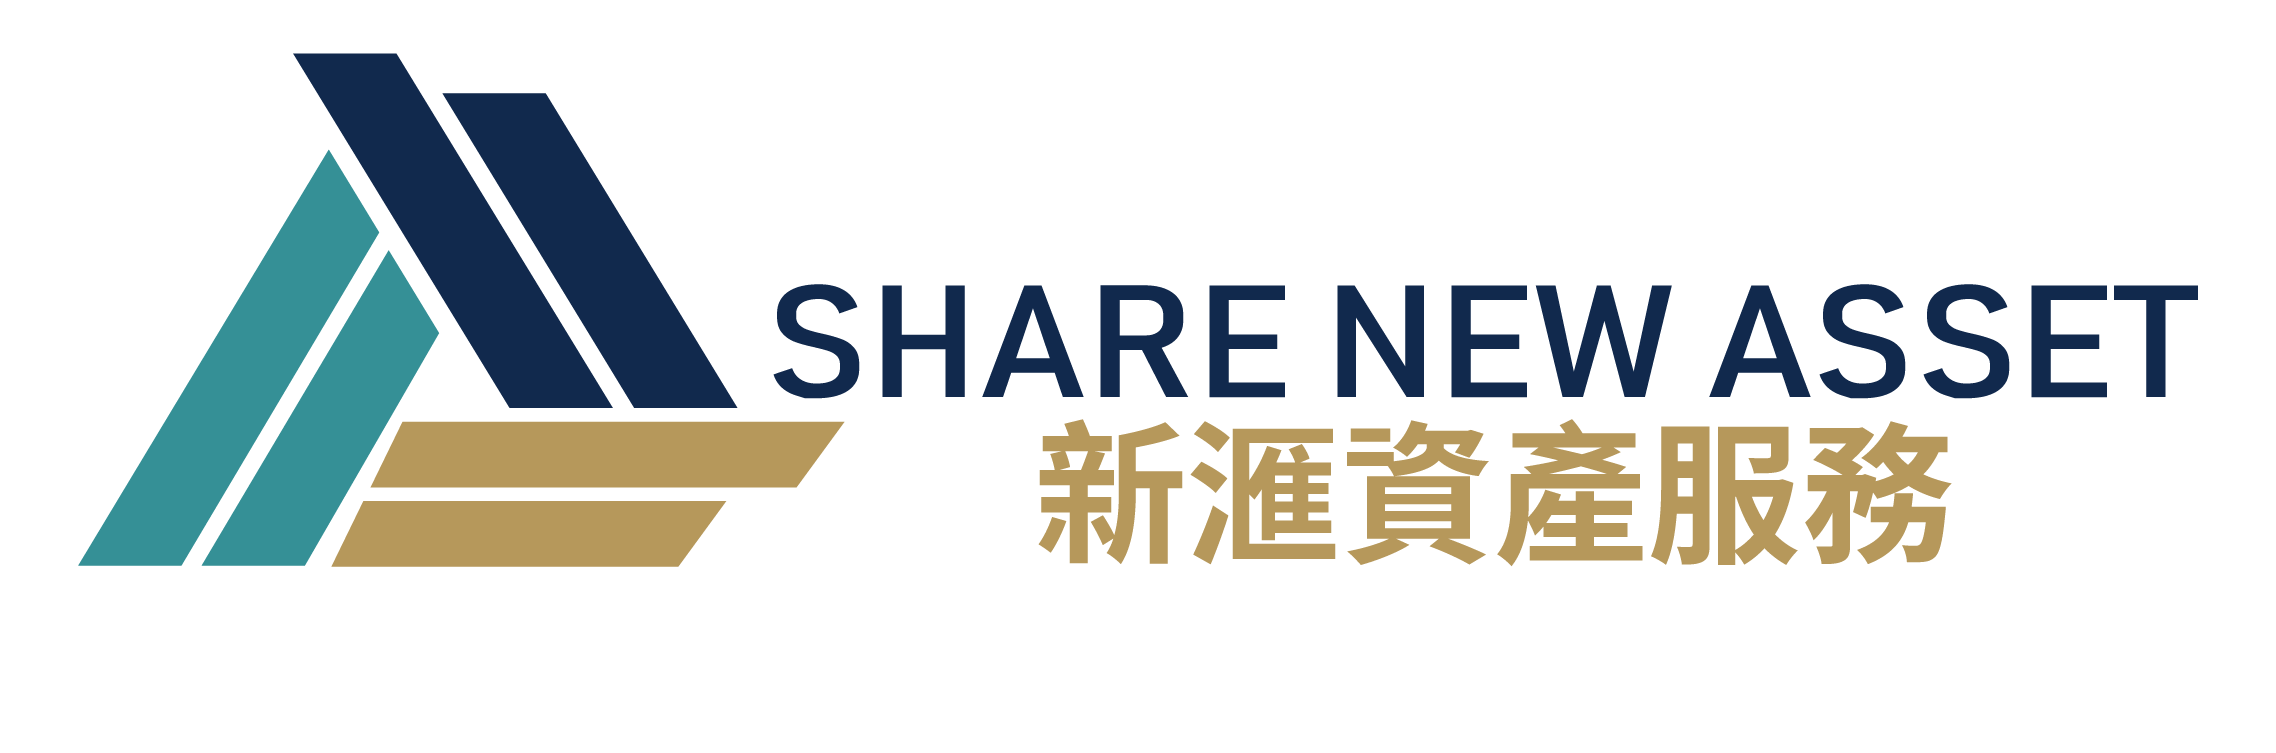 Share New Asset Services